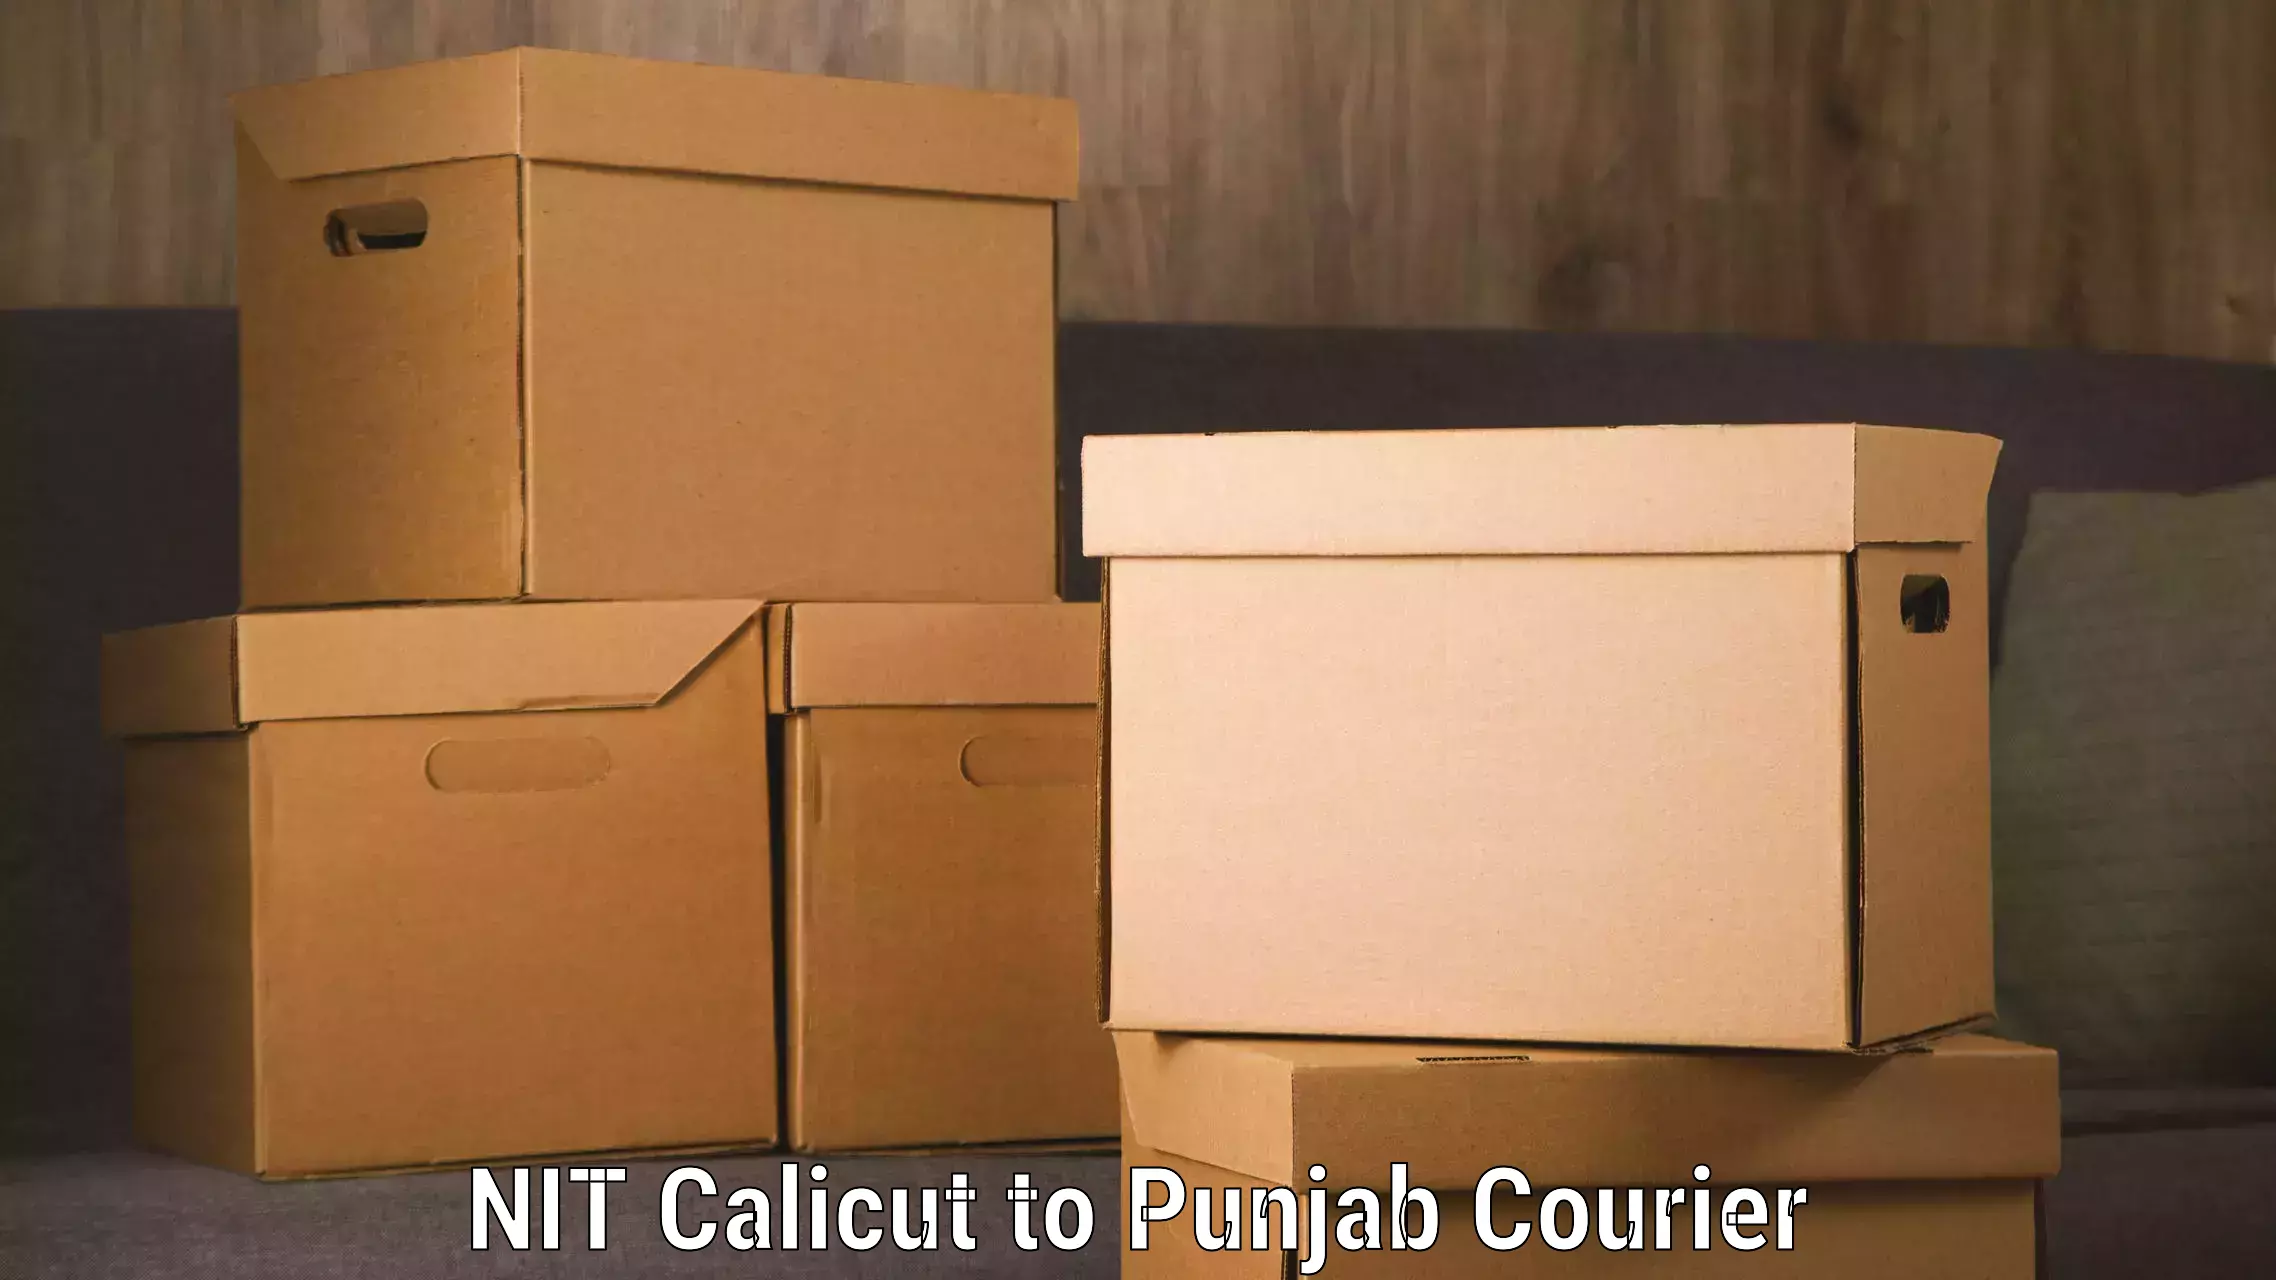 Courier service comparison in NIT Calicut to Punjab